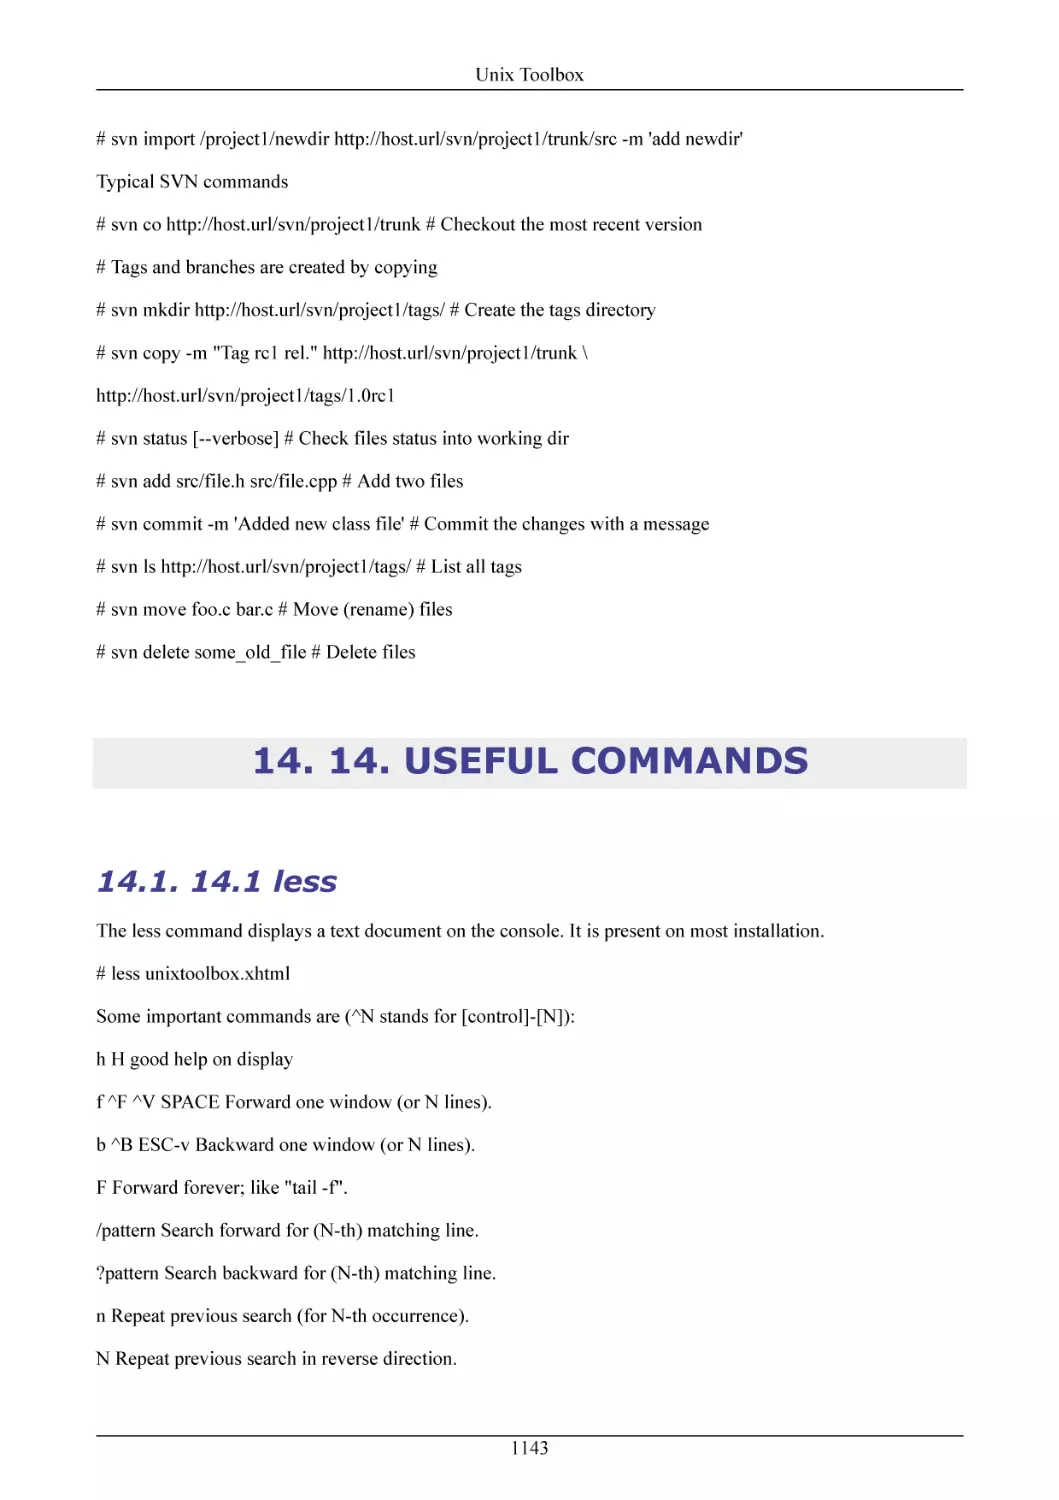 14. USEFUL COMMANDS
14.1 less